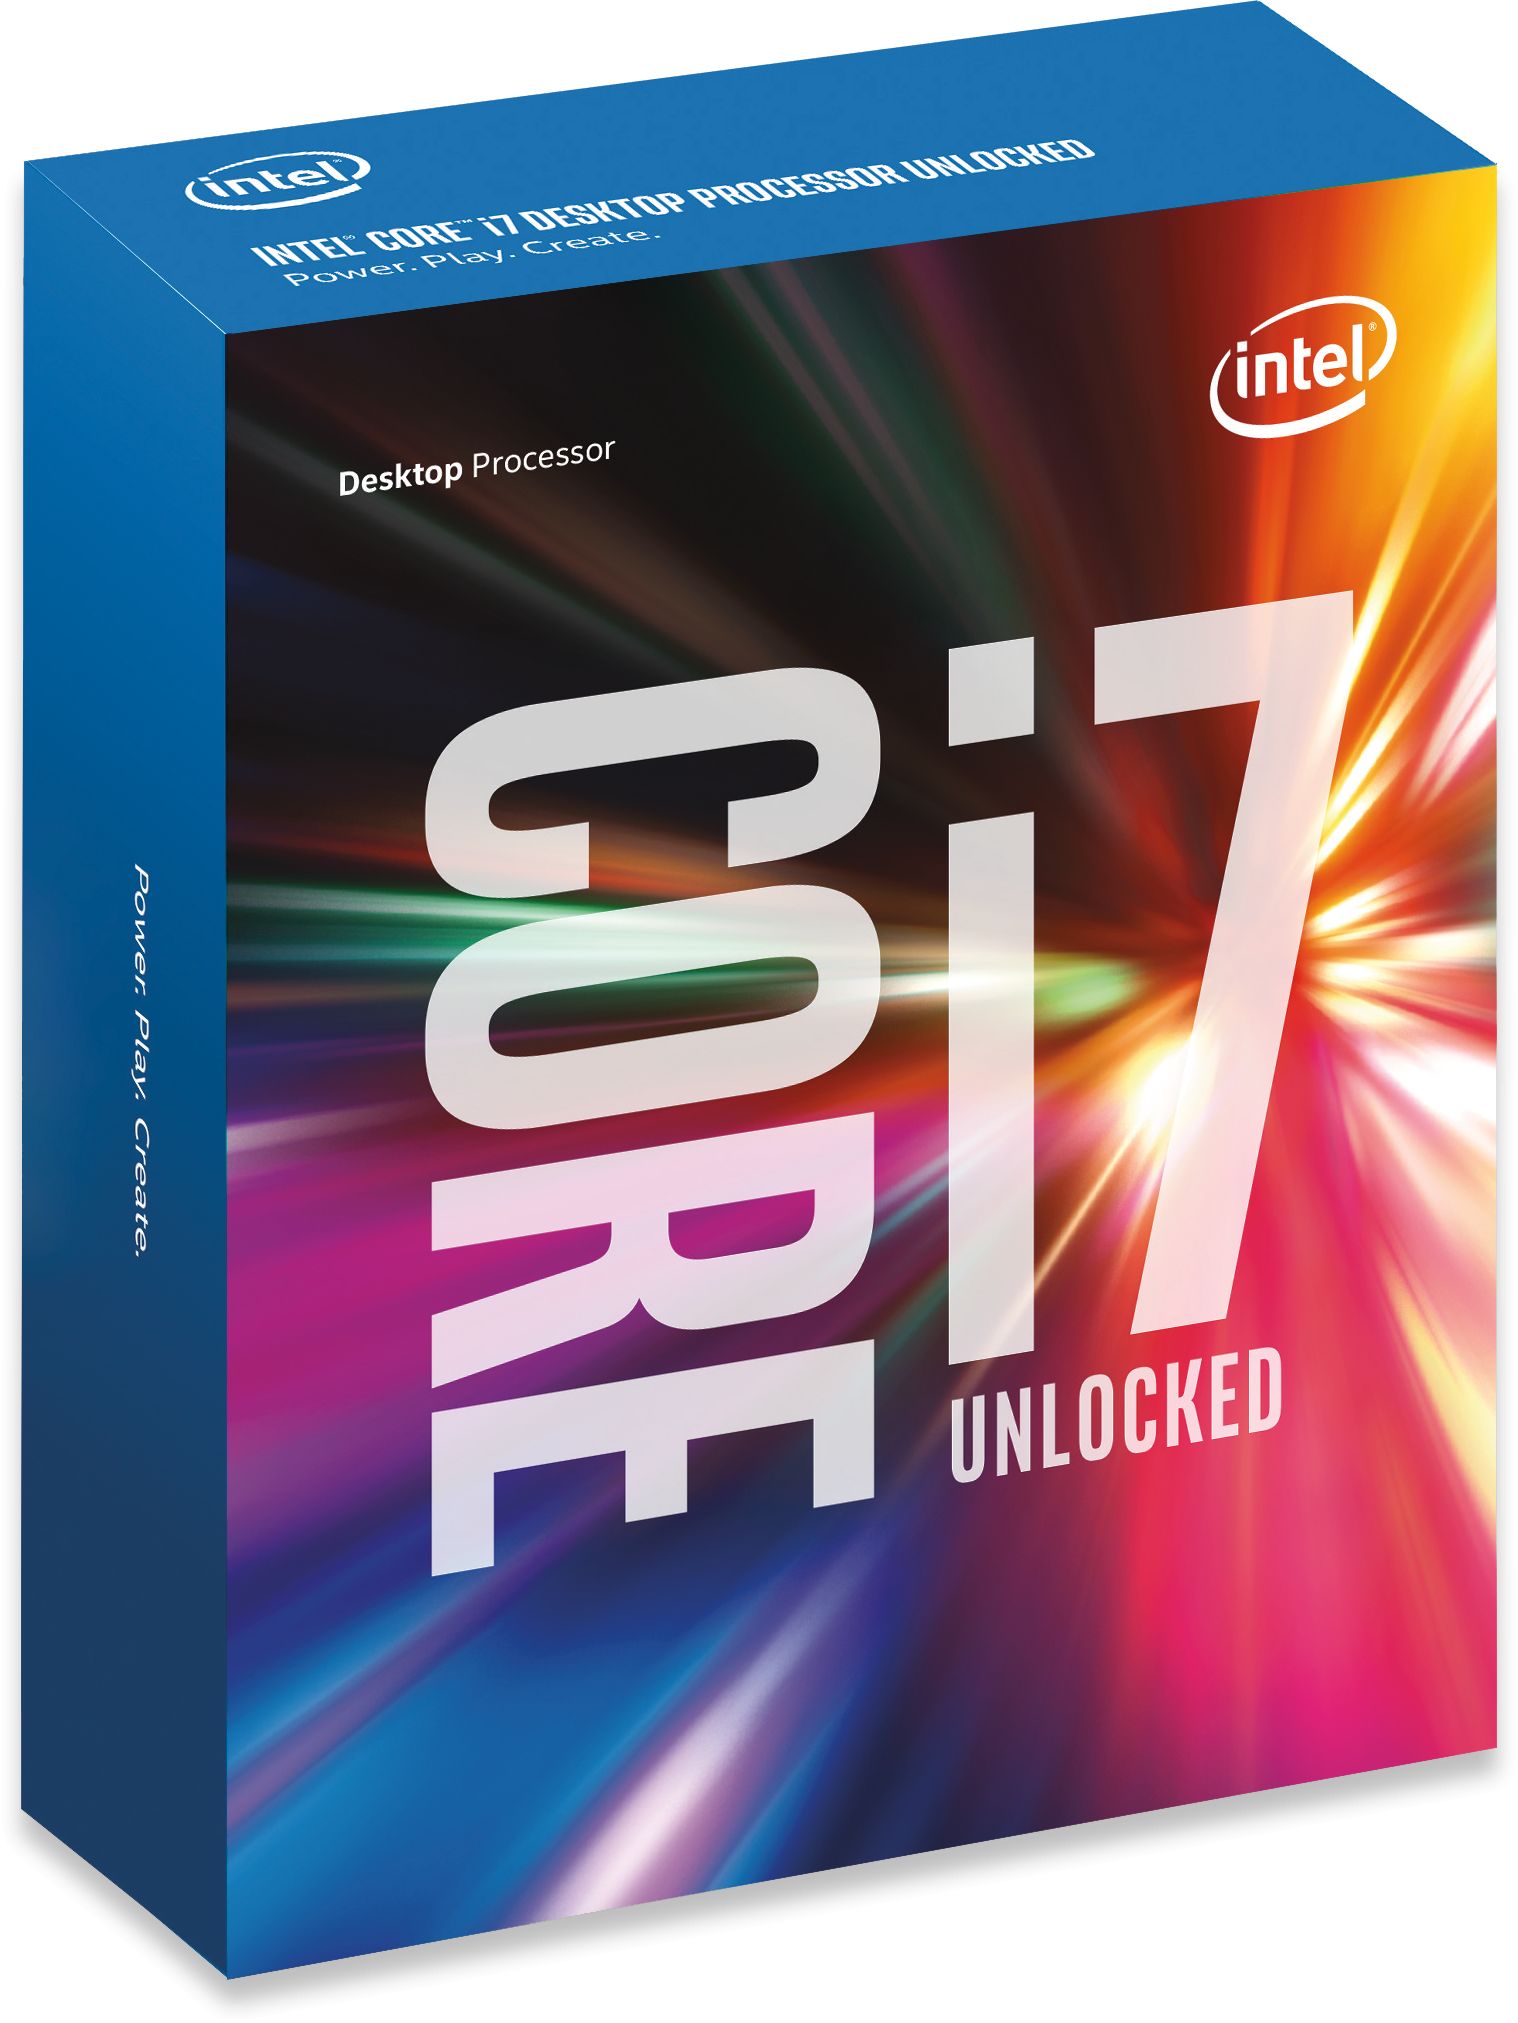 Intel Skylake 6th Generation Core i7 Processors